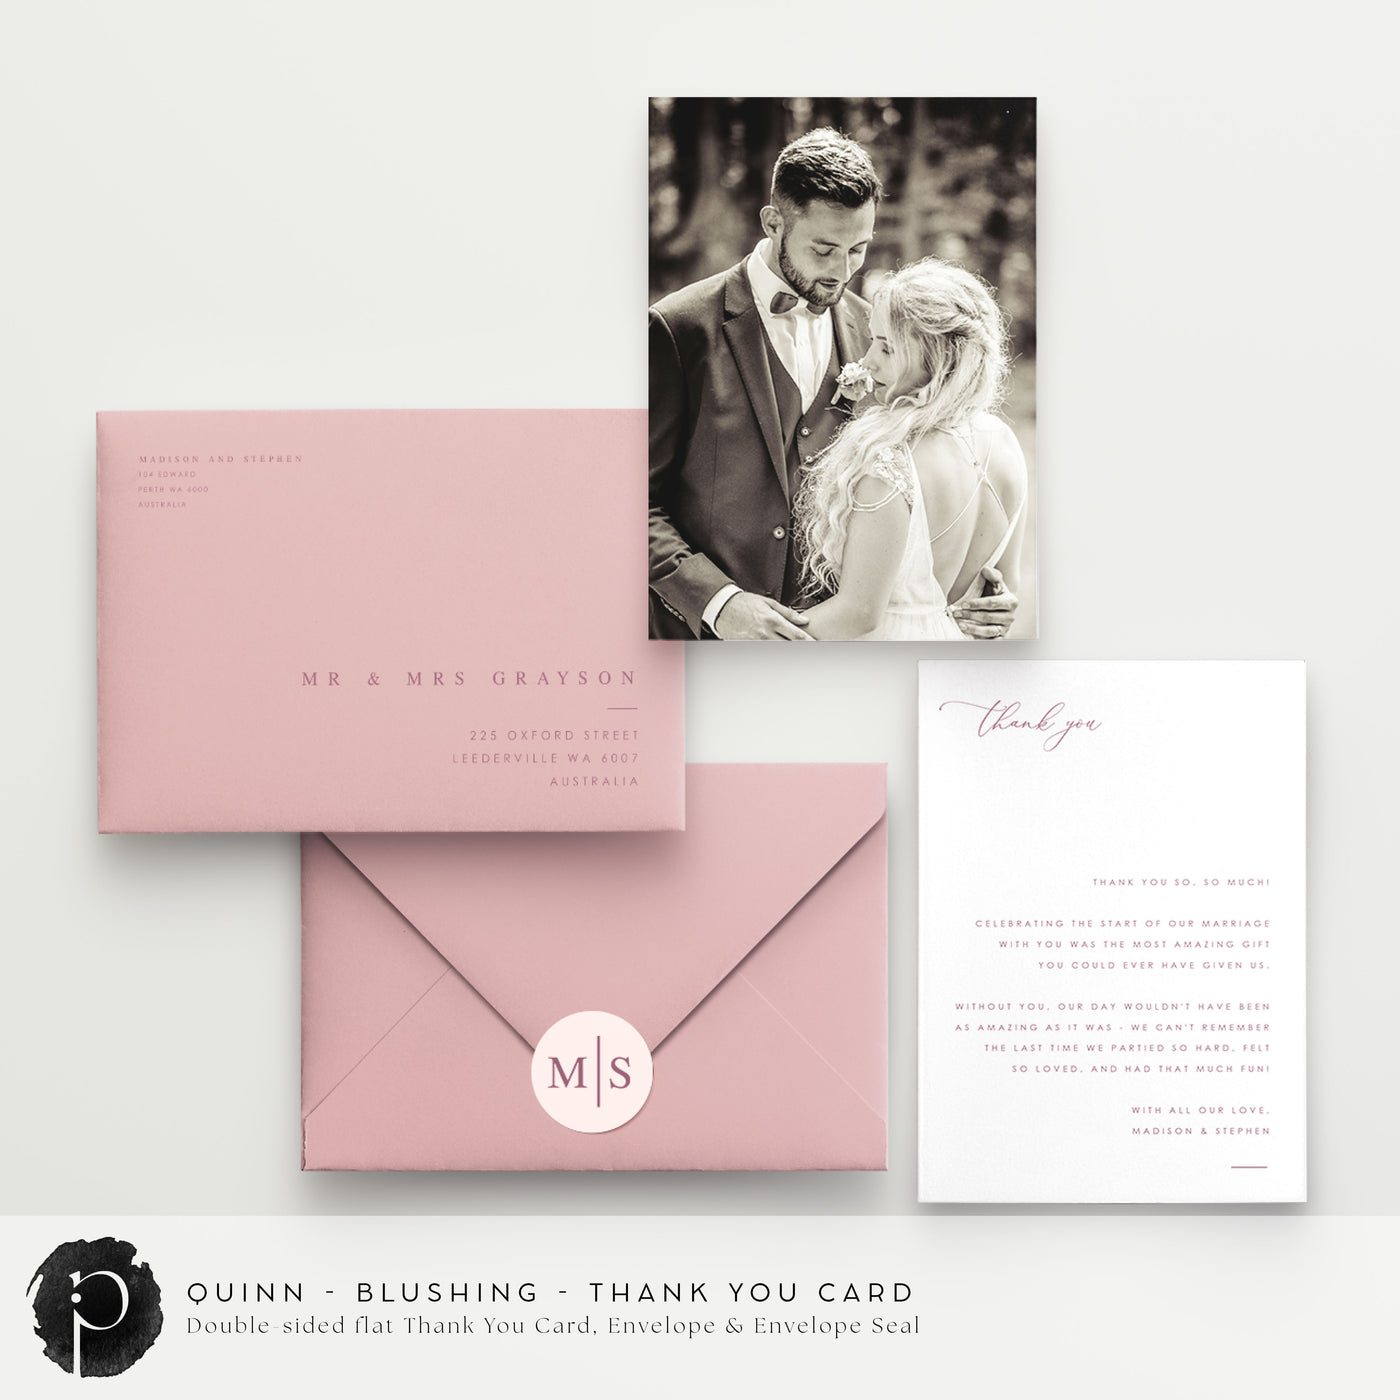 Quinn - Wedding Thank You Cards